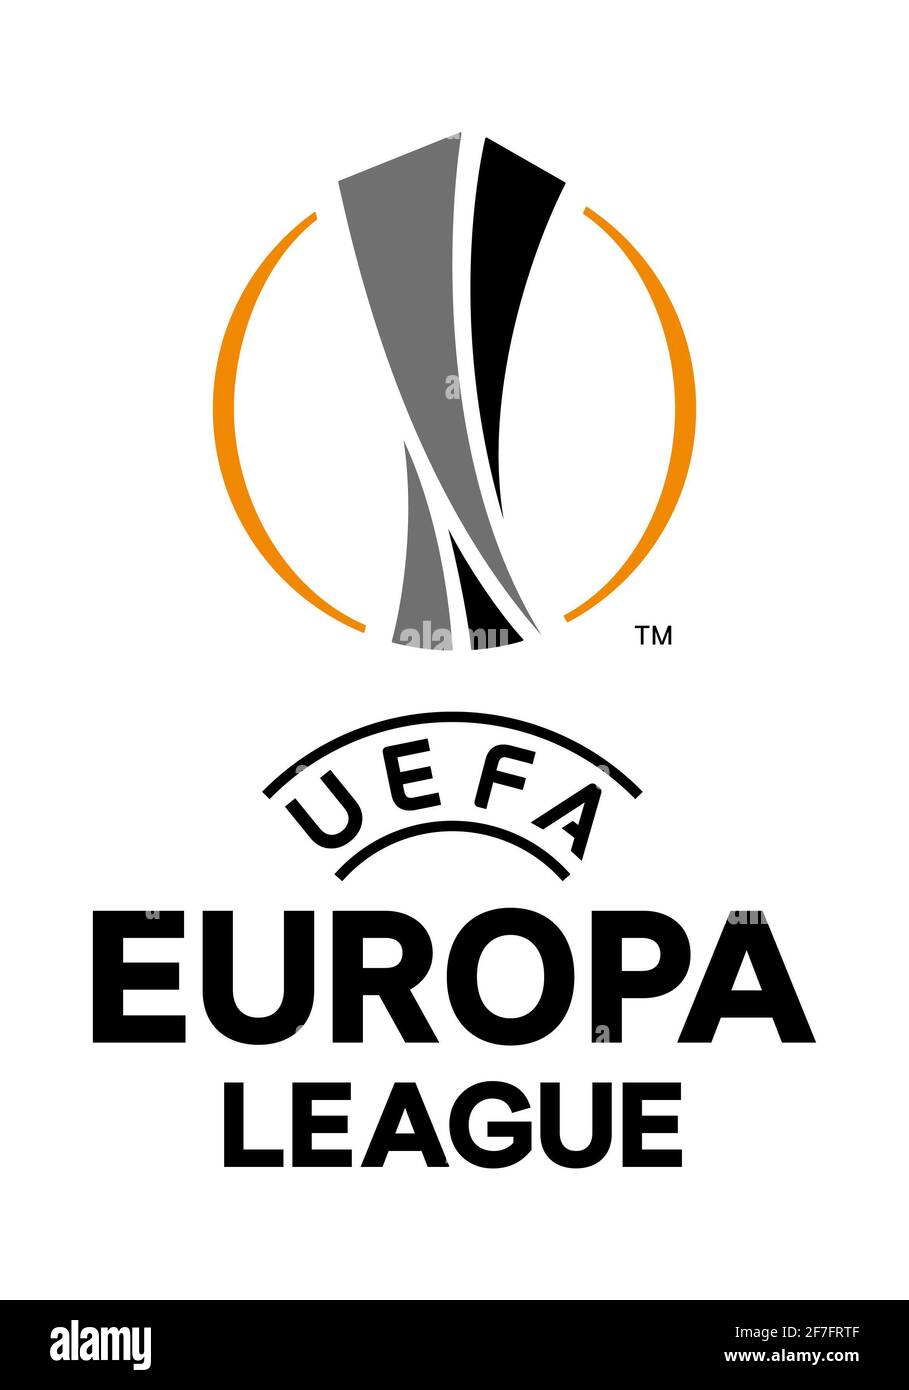 Europa League - BernardHamnah